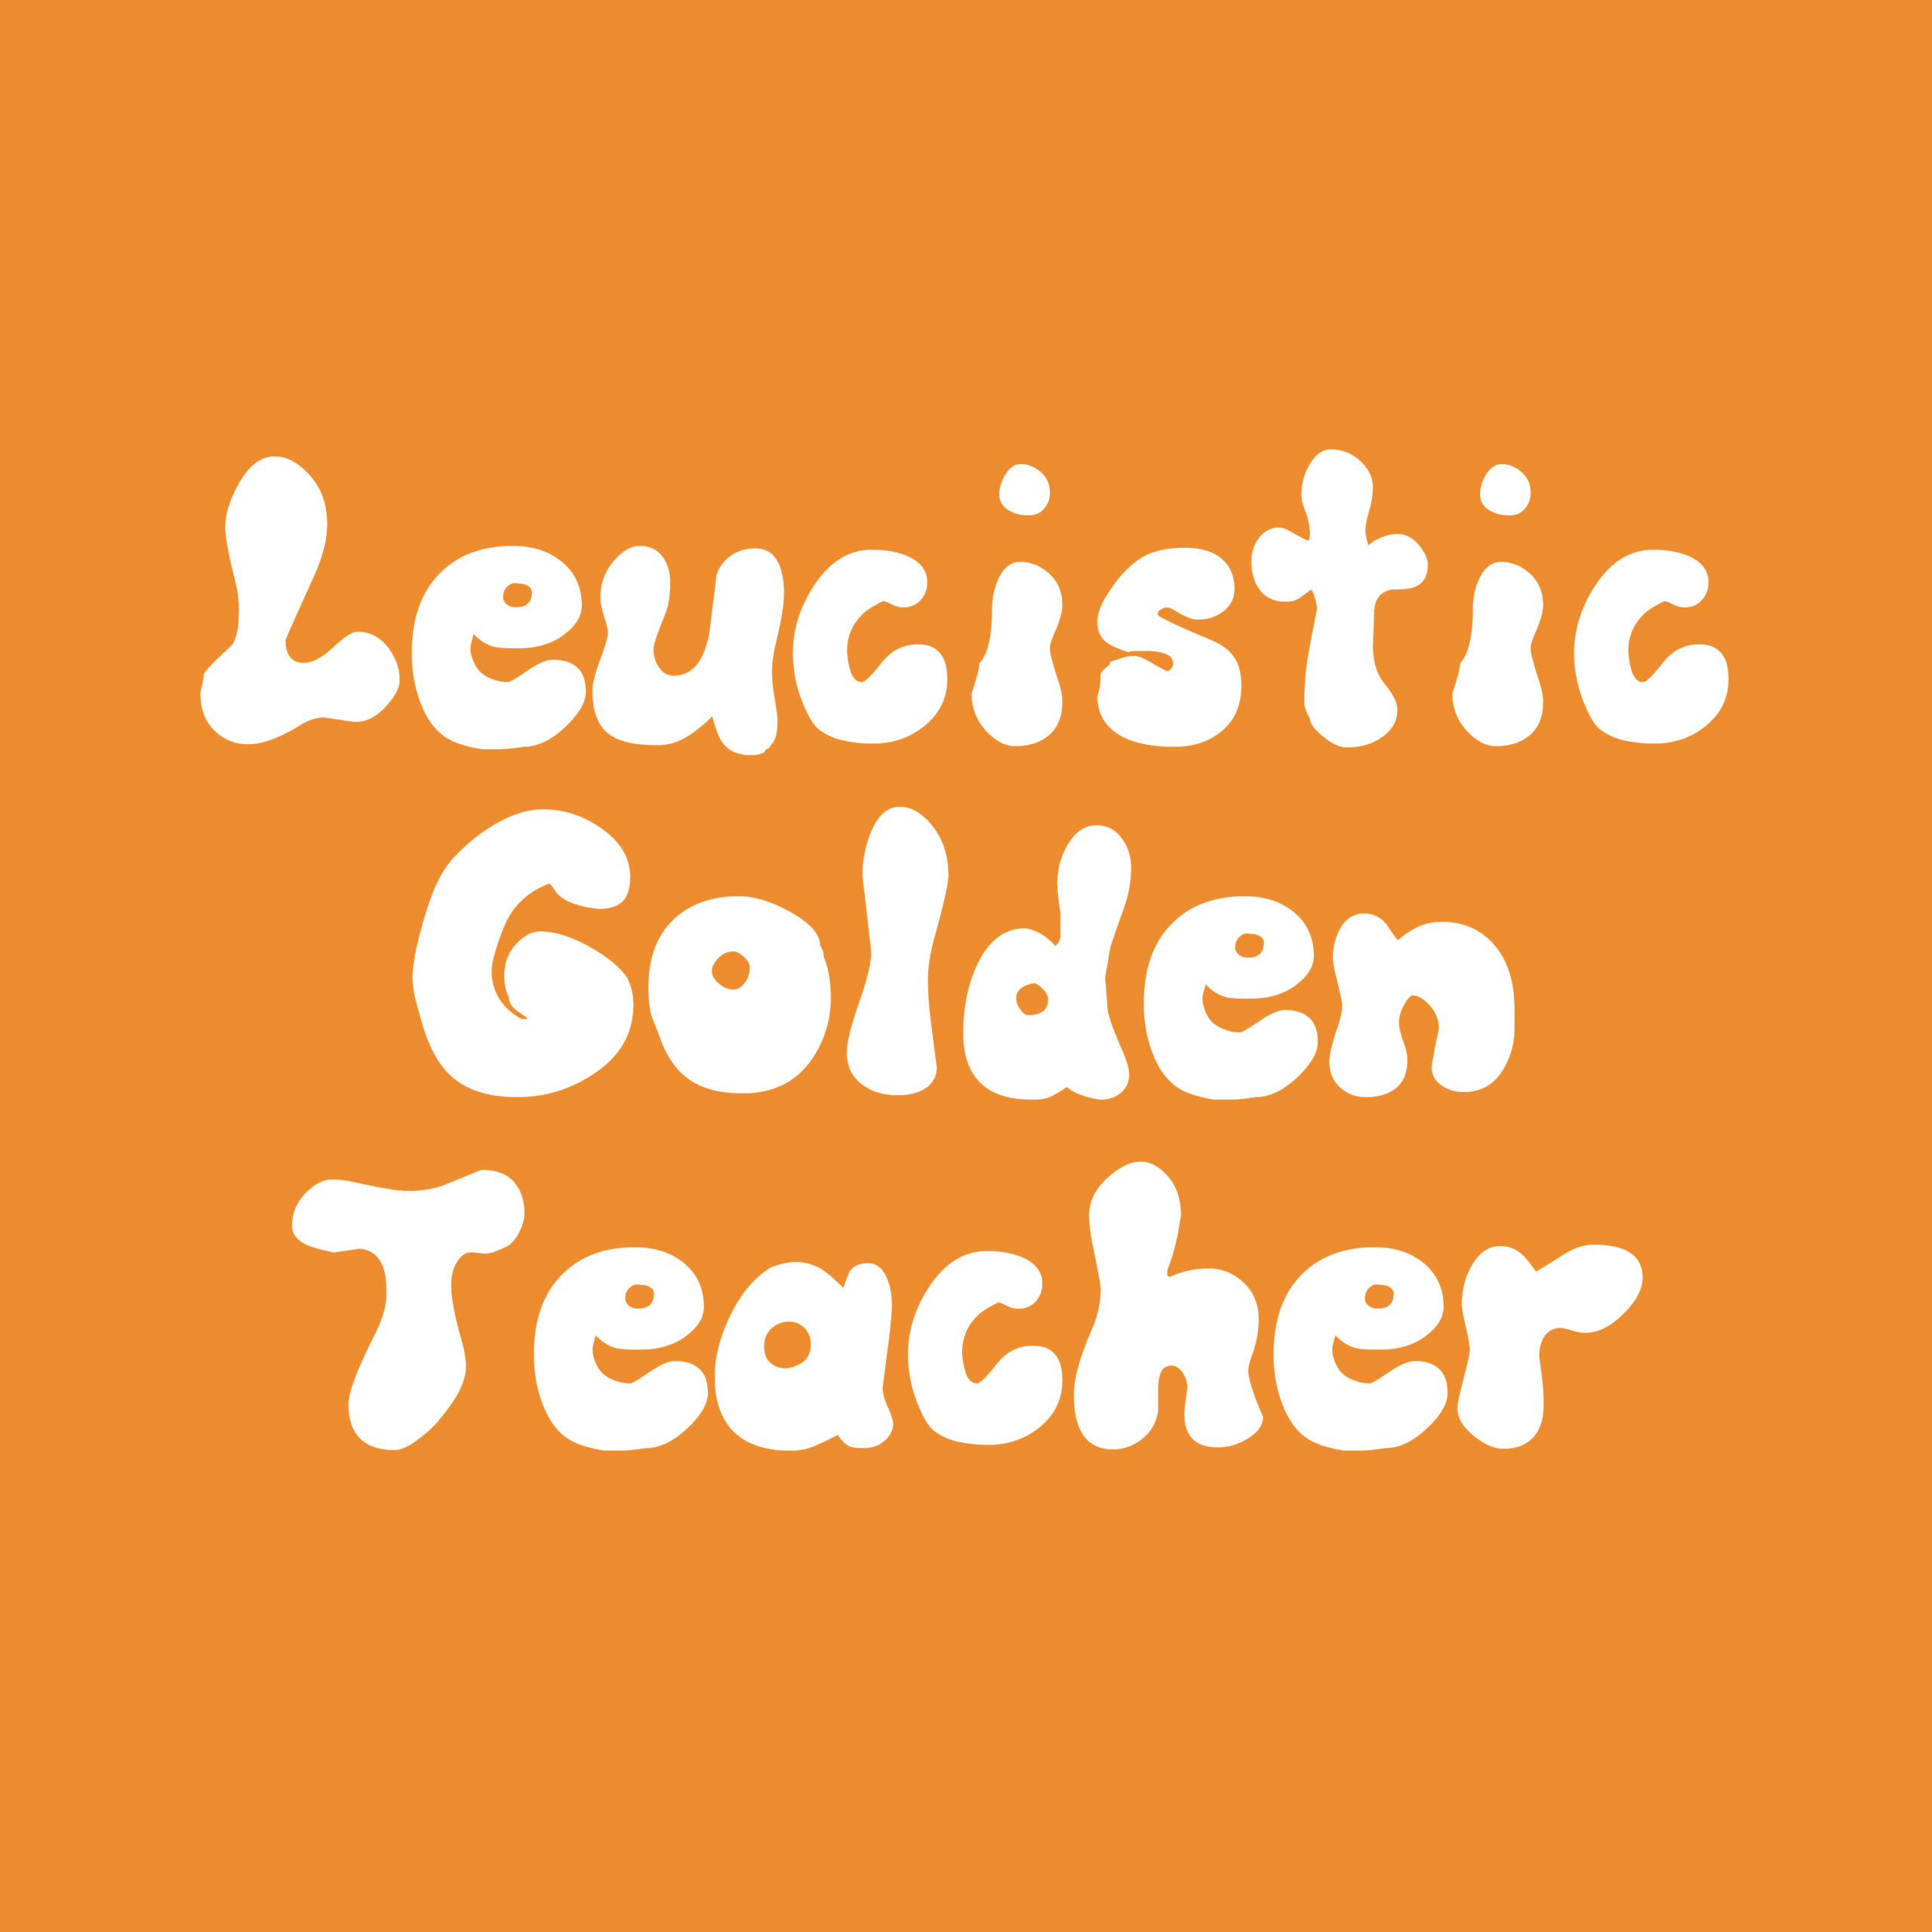 psilocybe cubensis var "Leucistic Golden Teacher" LGT spores